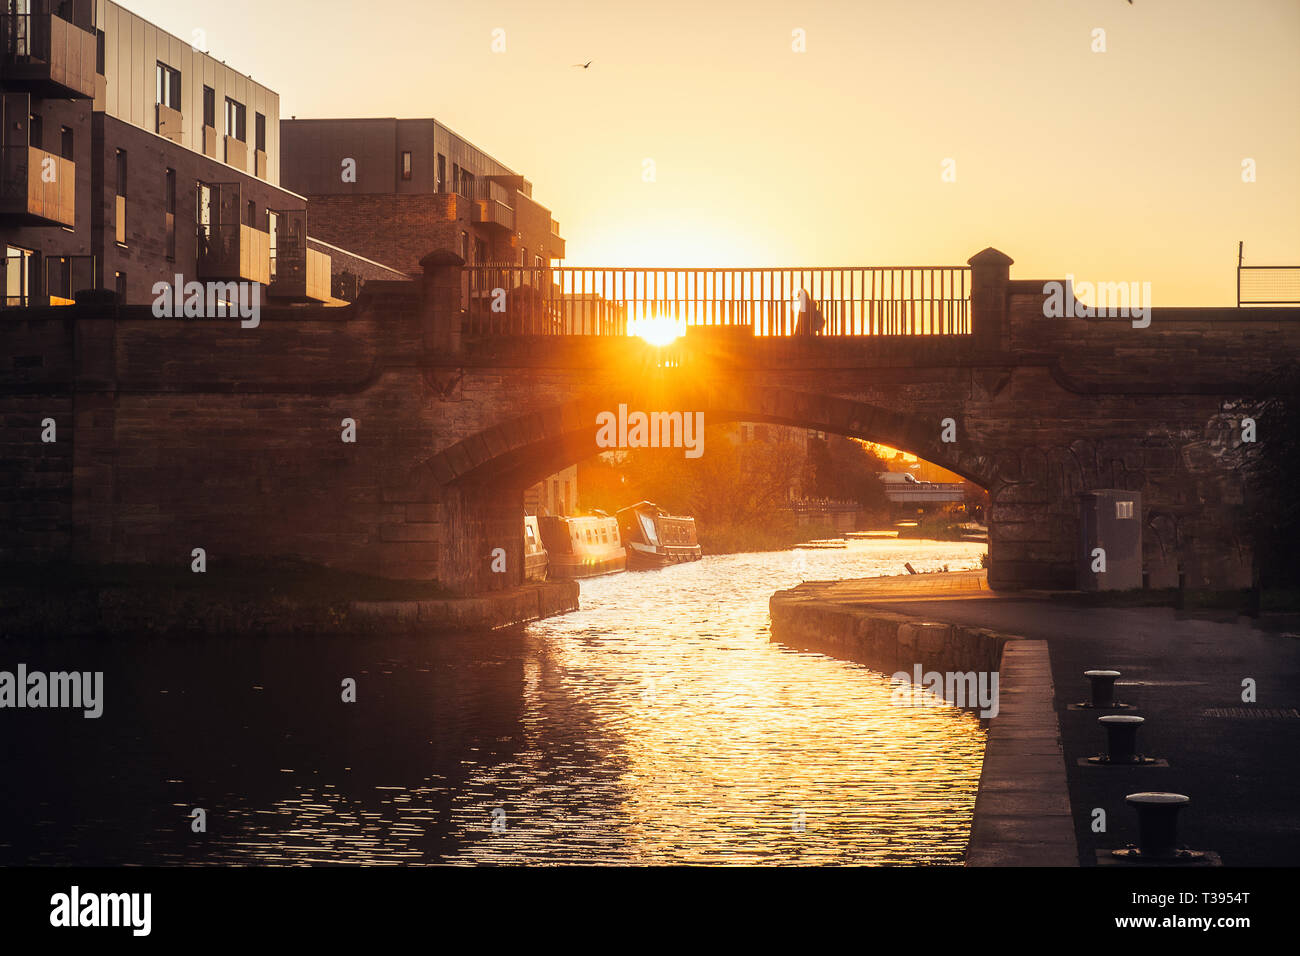 City bridge over the canal on the sunset, Edinburgh, United Kingdom Stock Photo